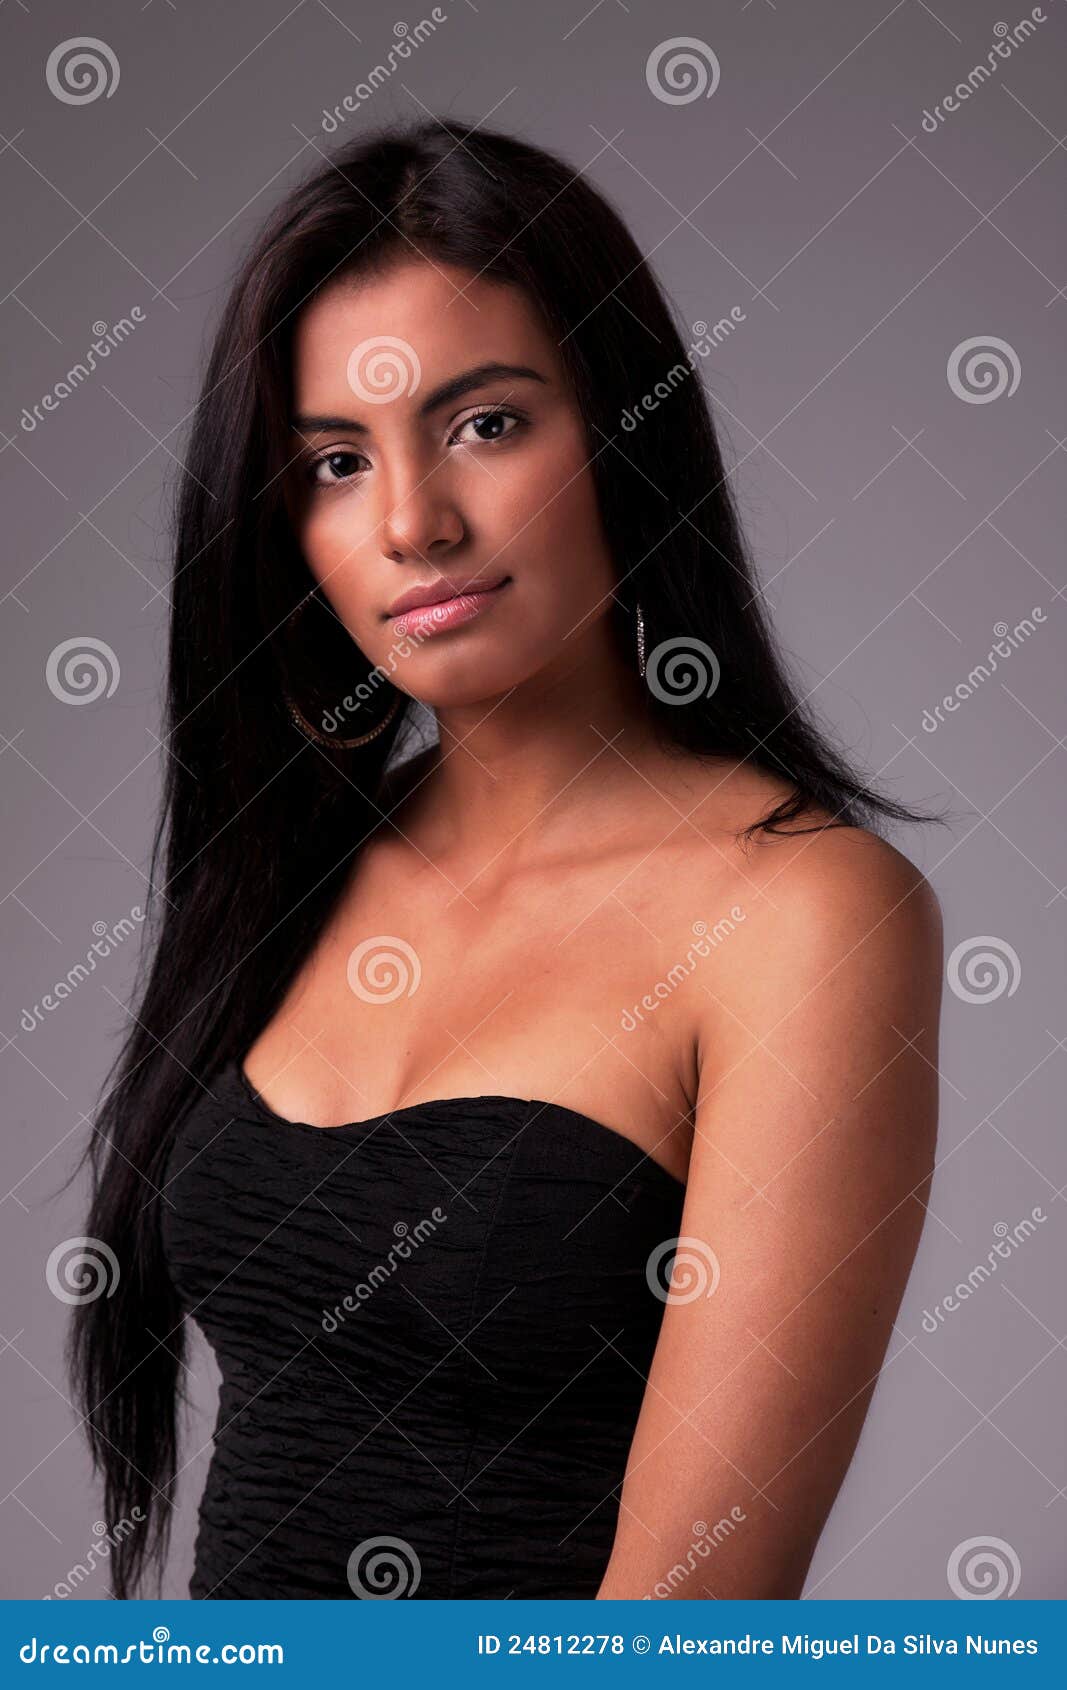 adam geller add photo pictures of beautiful latin women